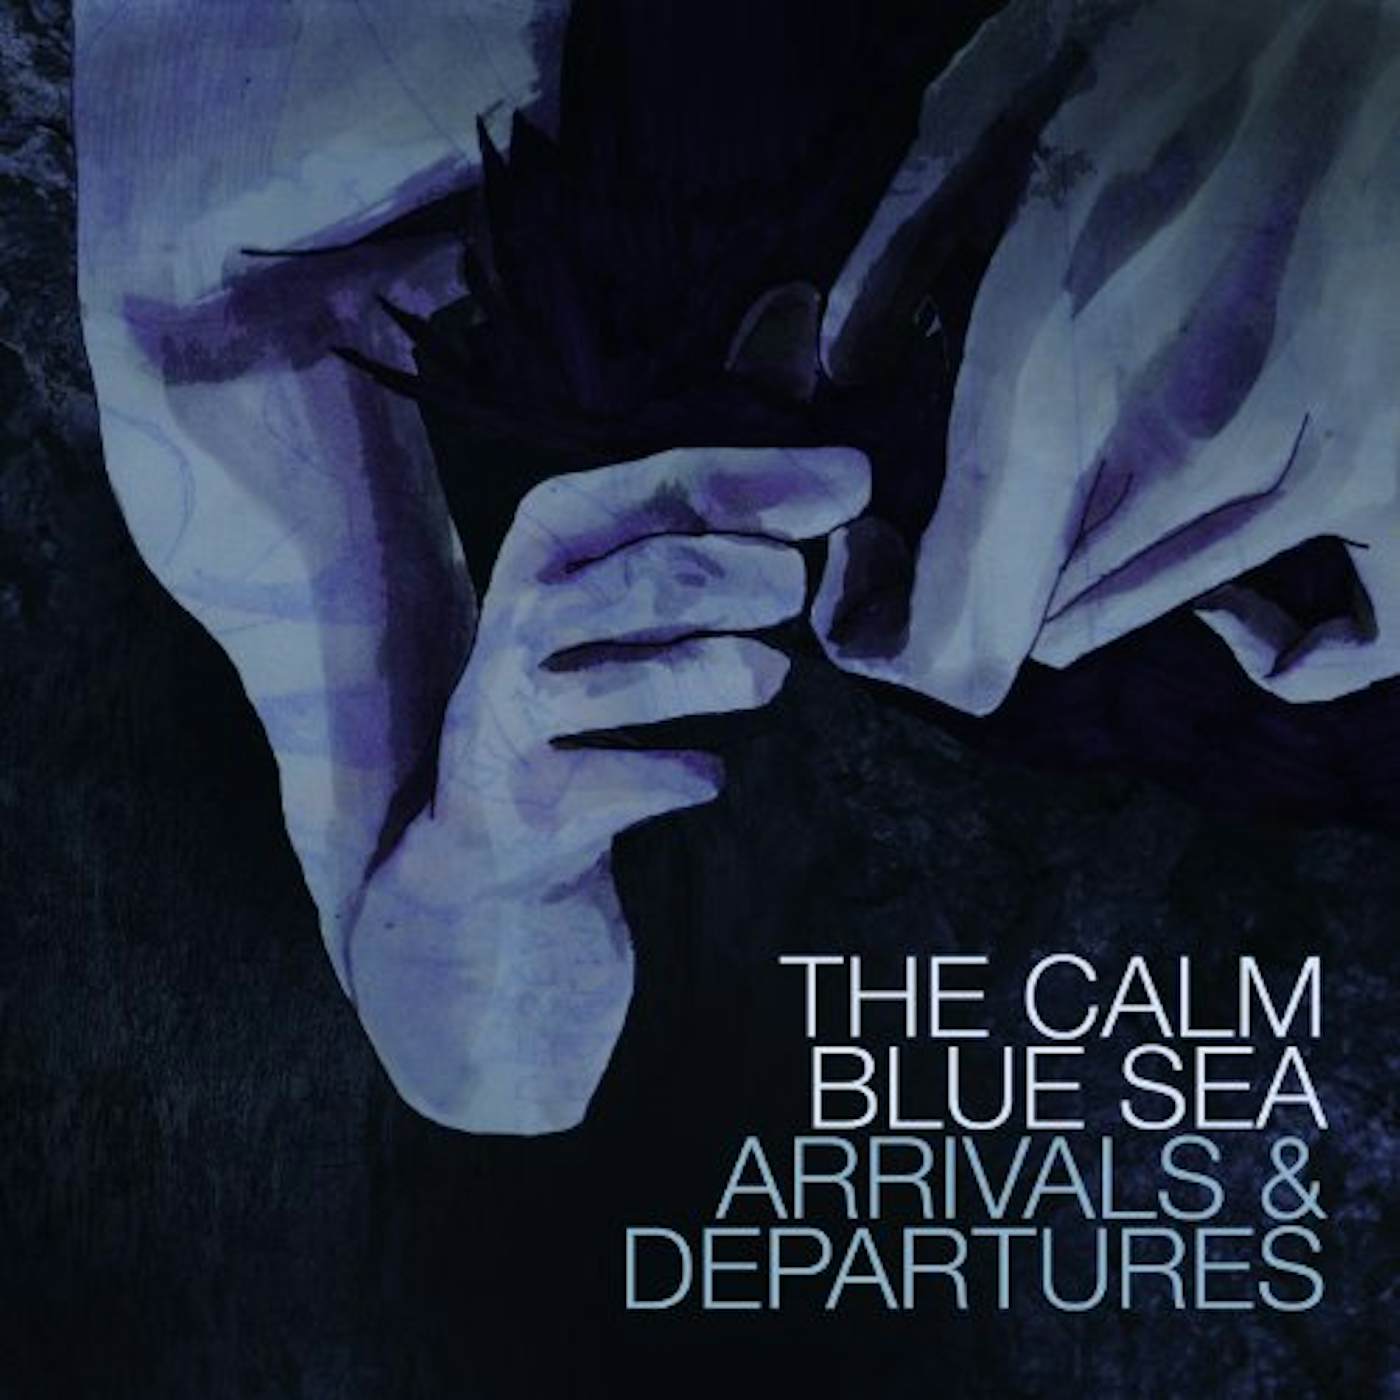 The Calm Blue Sea Arrivals & Departures Vinyl Record